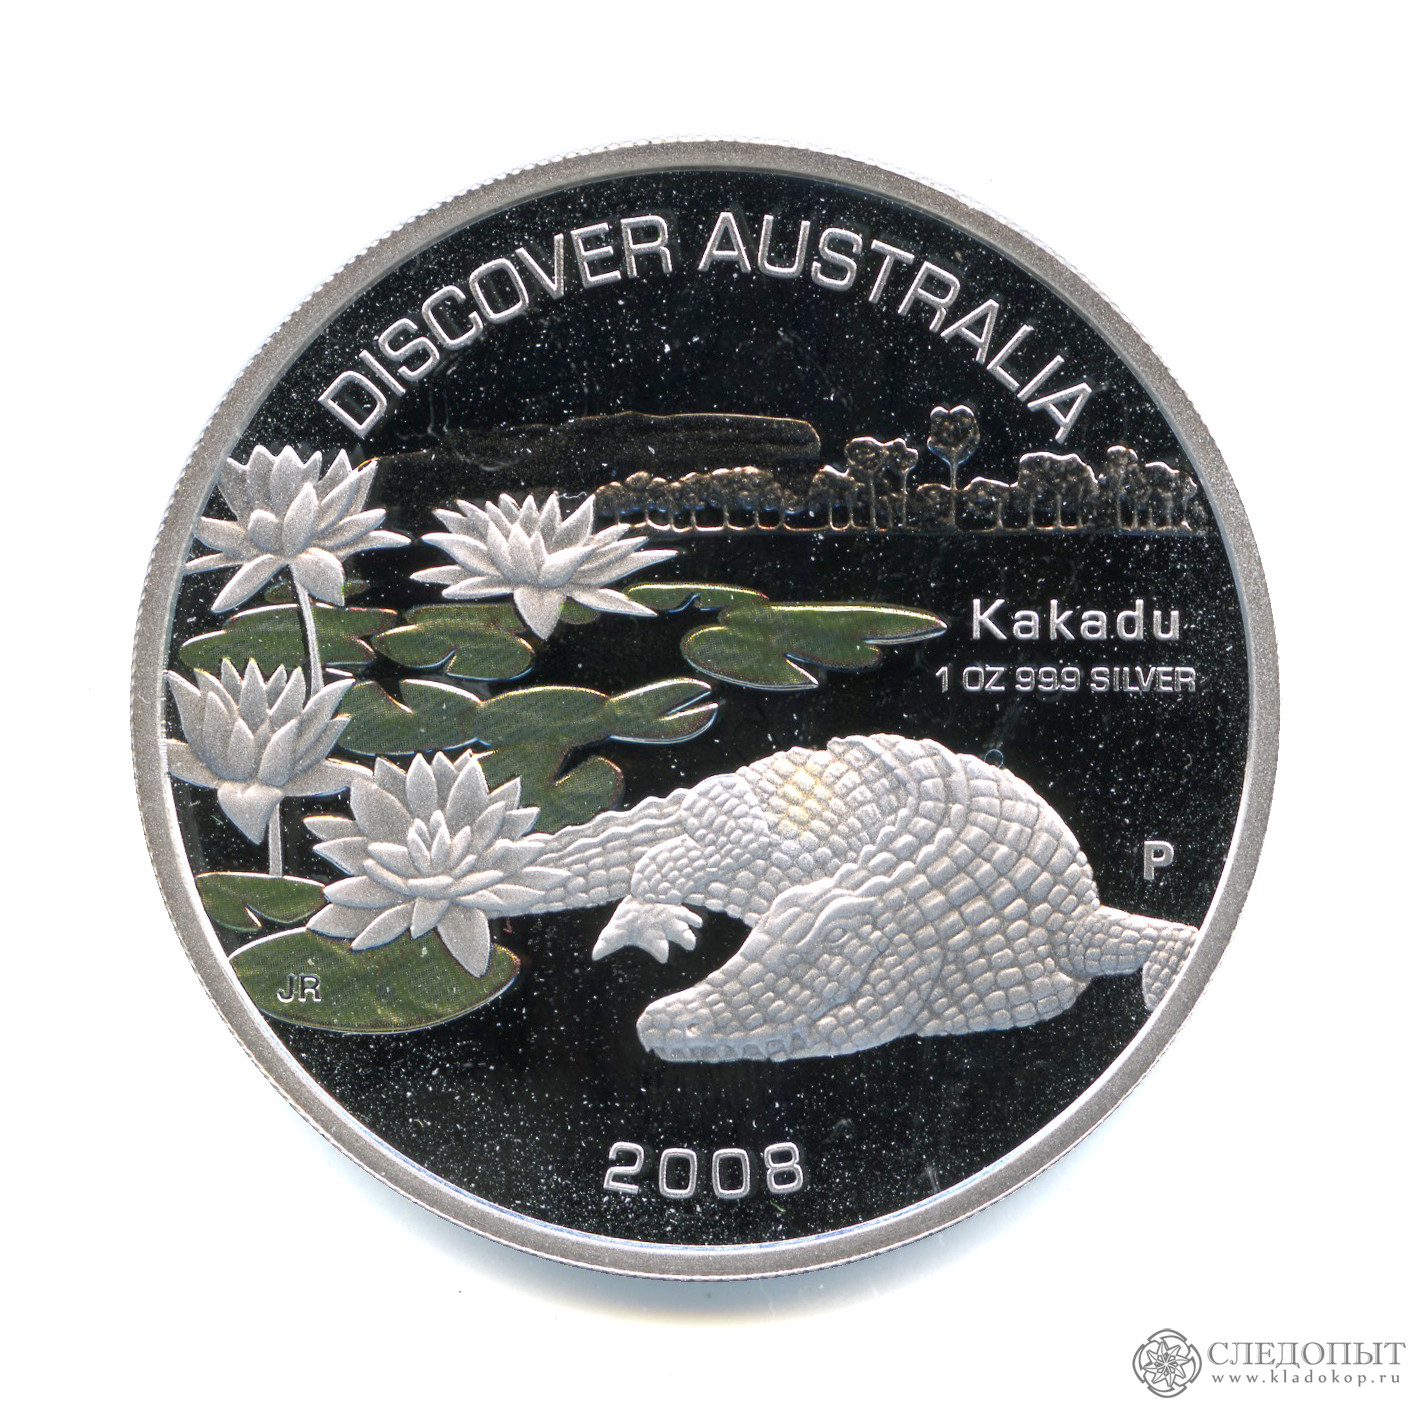 1 доллар 2008. Монета памятная Австралии 1 доллар. Серебряные монеты Австралии парк какадуша. 1 Доллар 2008 Австралия. Австралийская коллекционная монета.